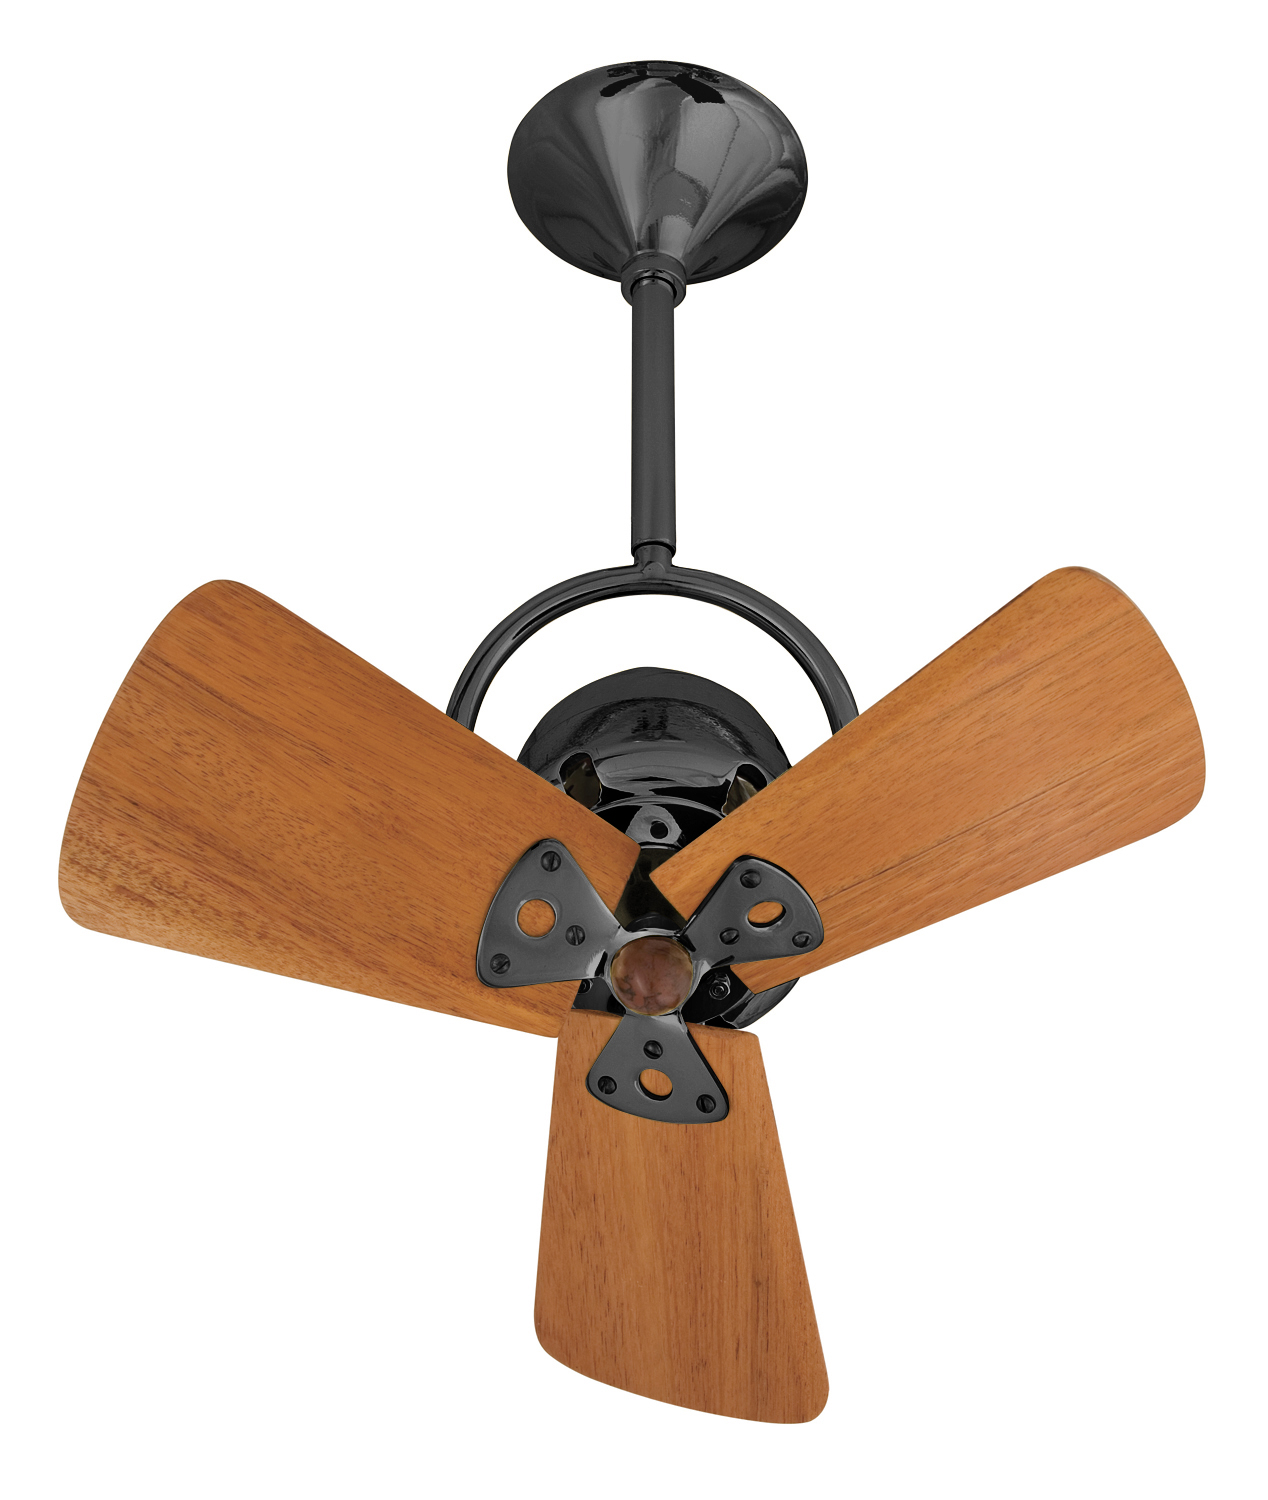 Bianca Direcional ceiling fan in Black Nickel with mahogany wood blades by Matthews Fan Company.